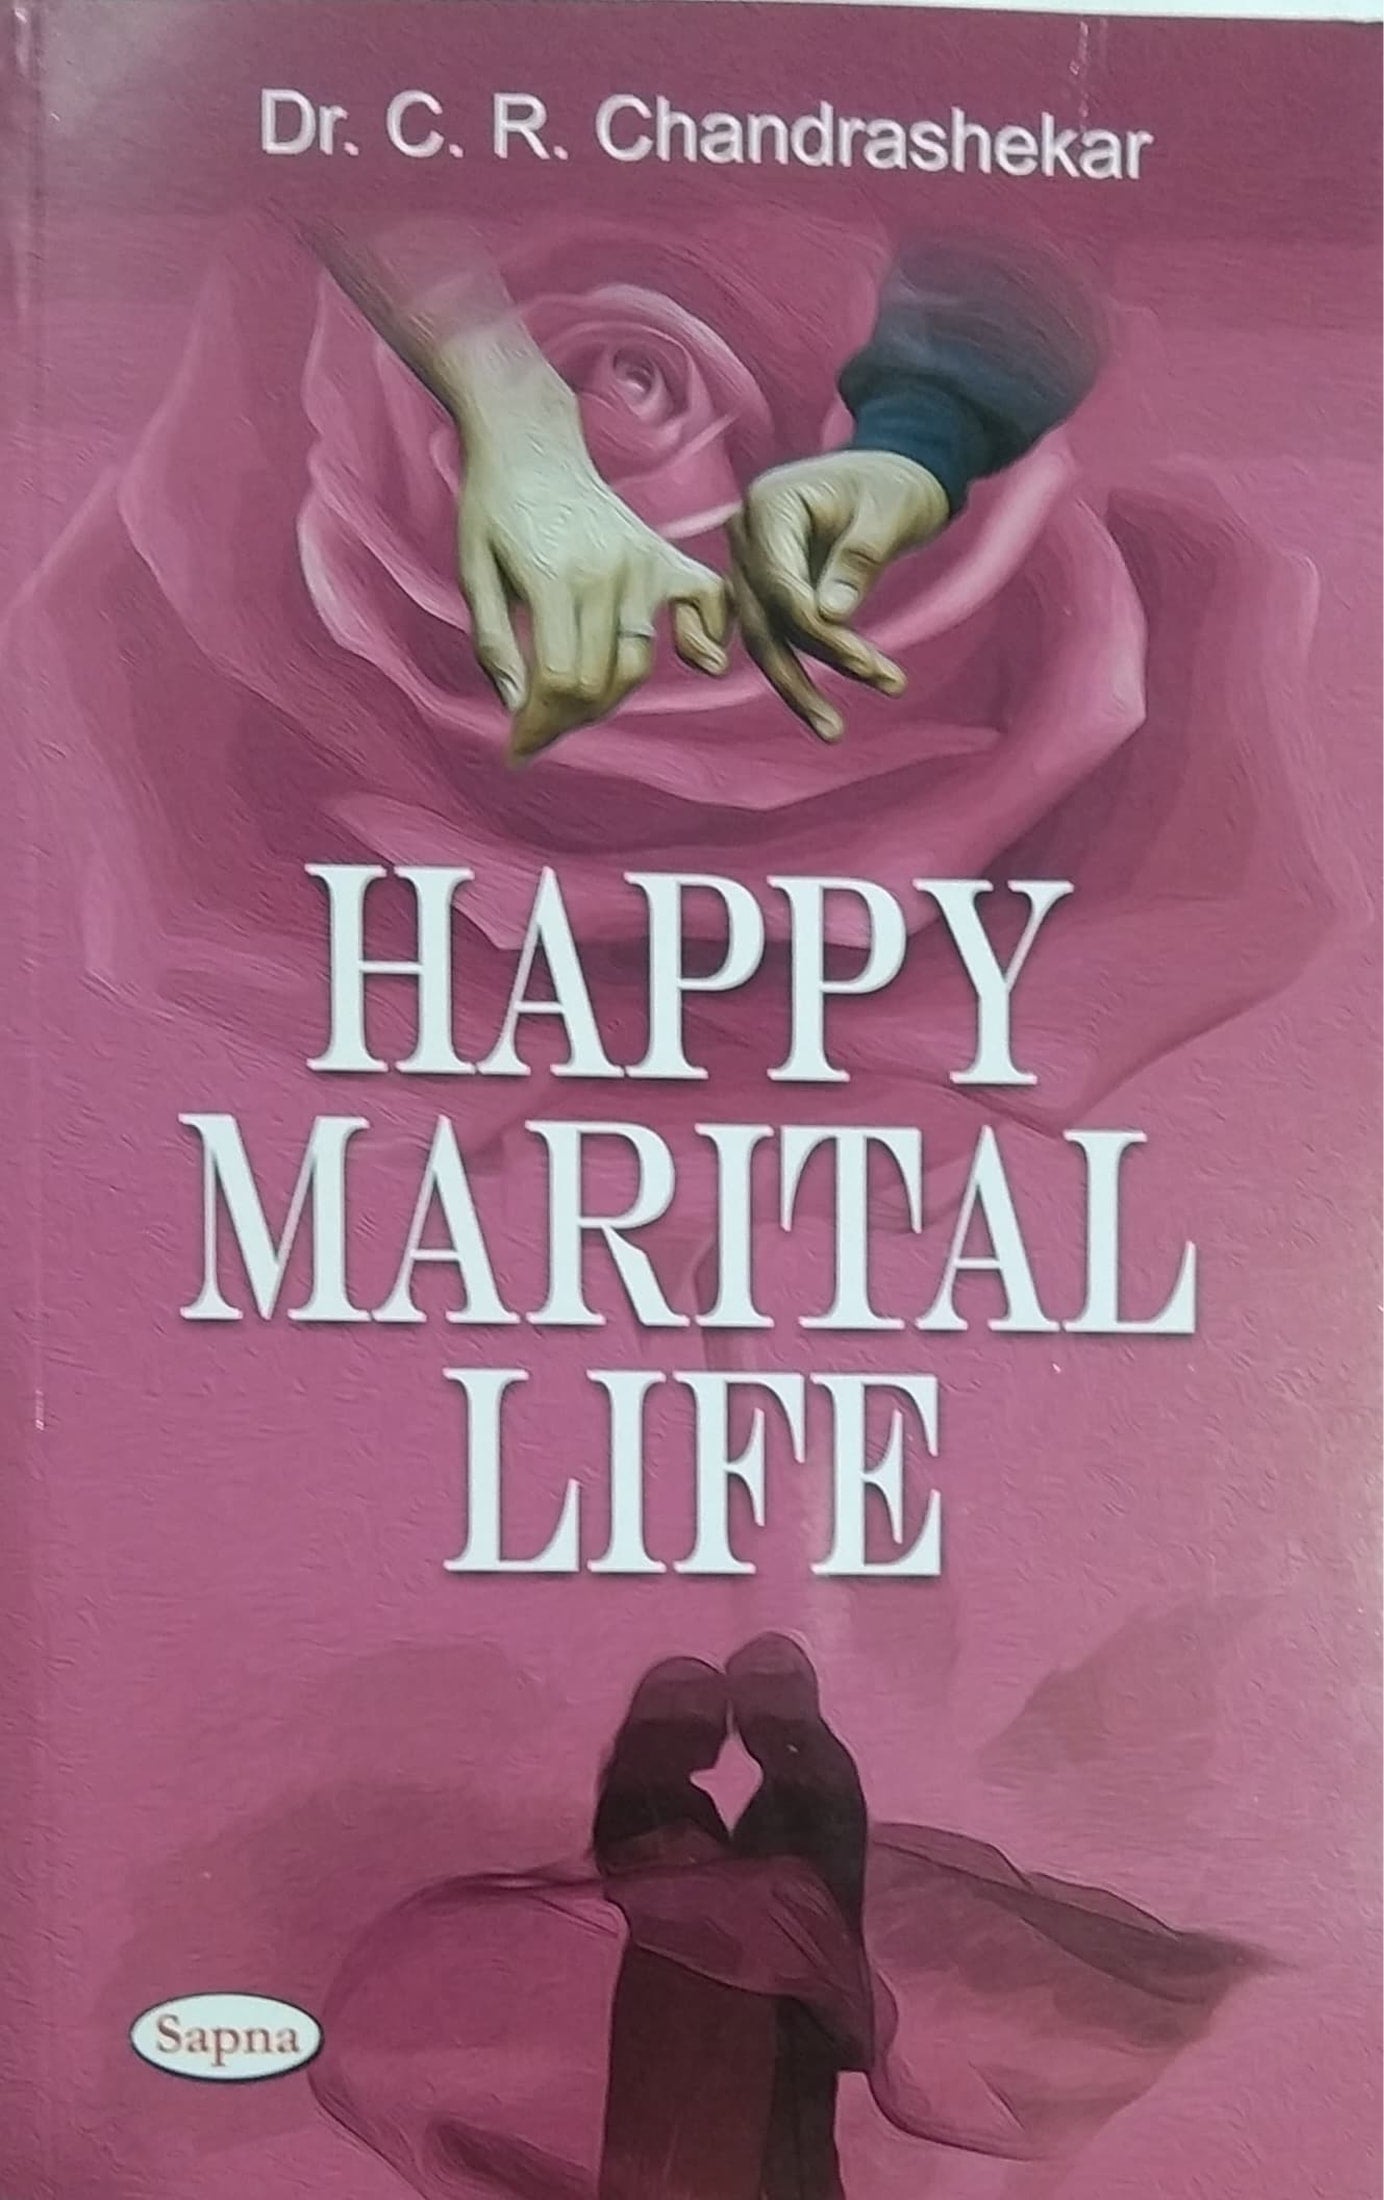 HAPPY MARITAL LIFE